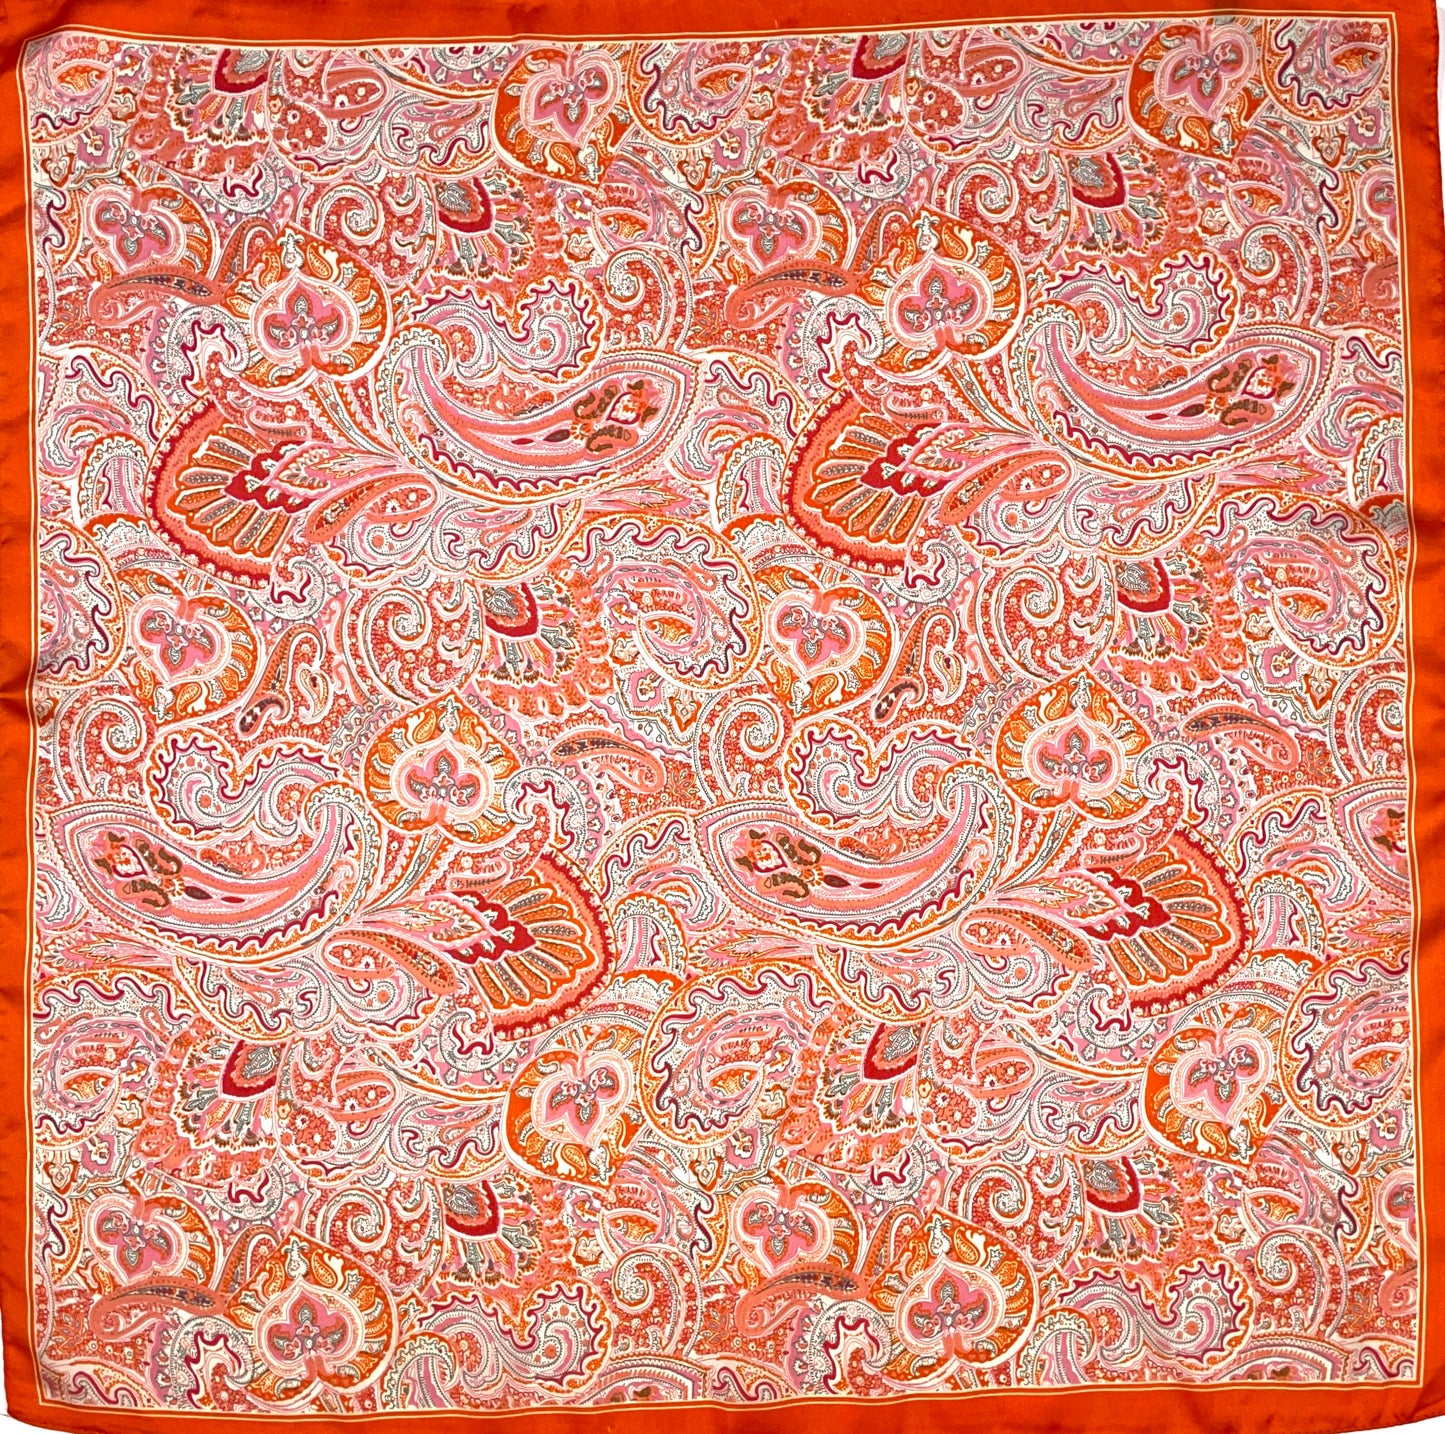 Pink and Orange Paisley Print Wild Rag